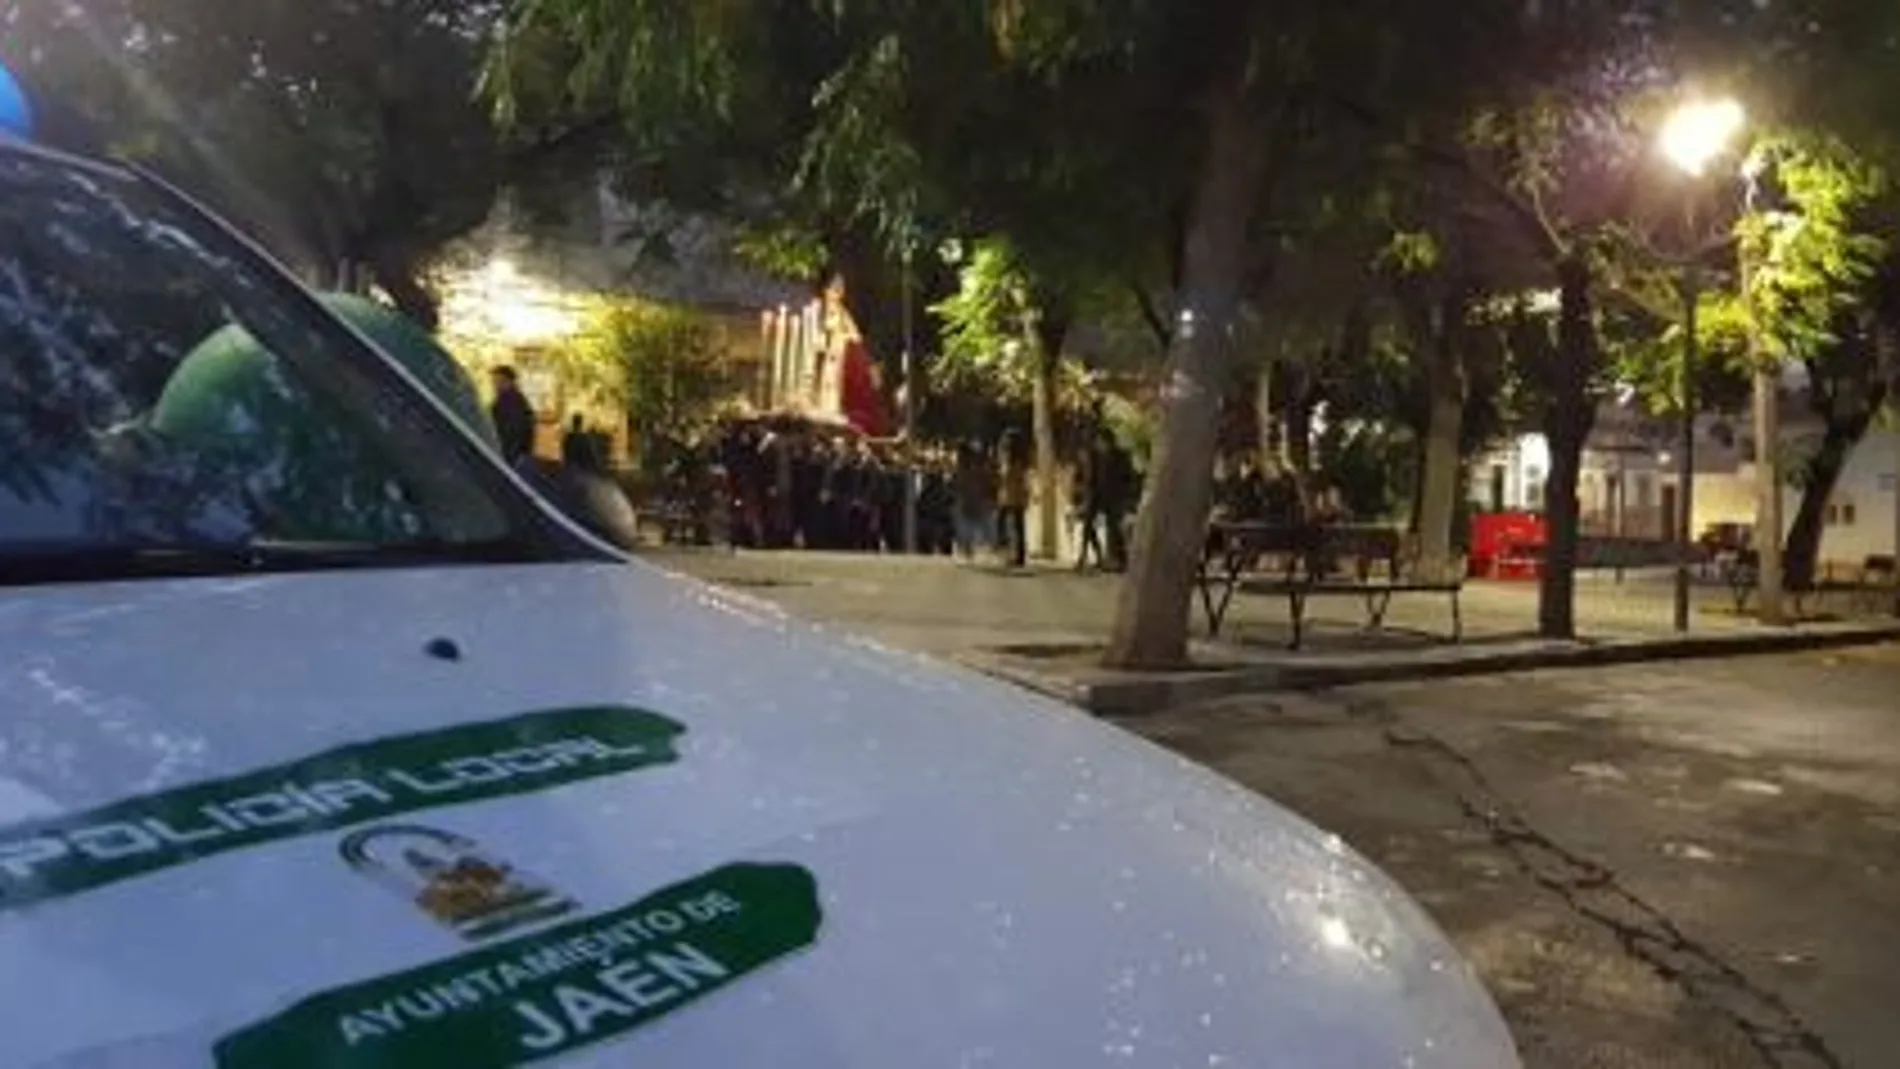 Policia Local de Jaén / Twitter